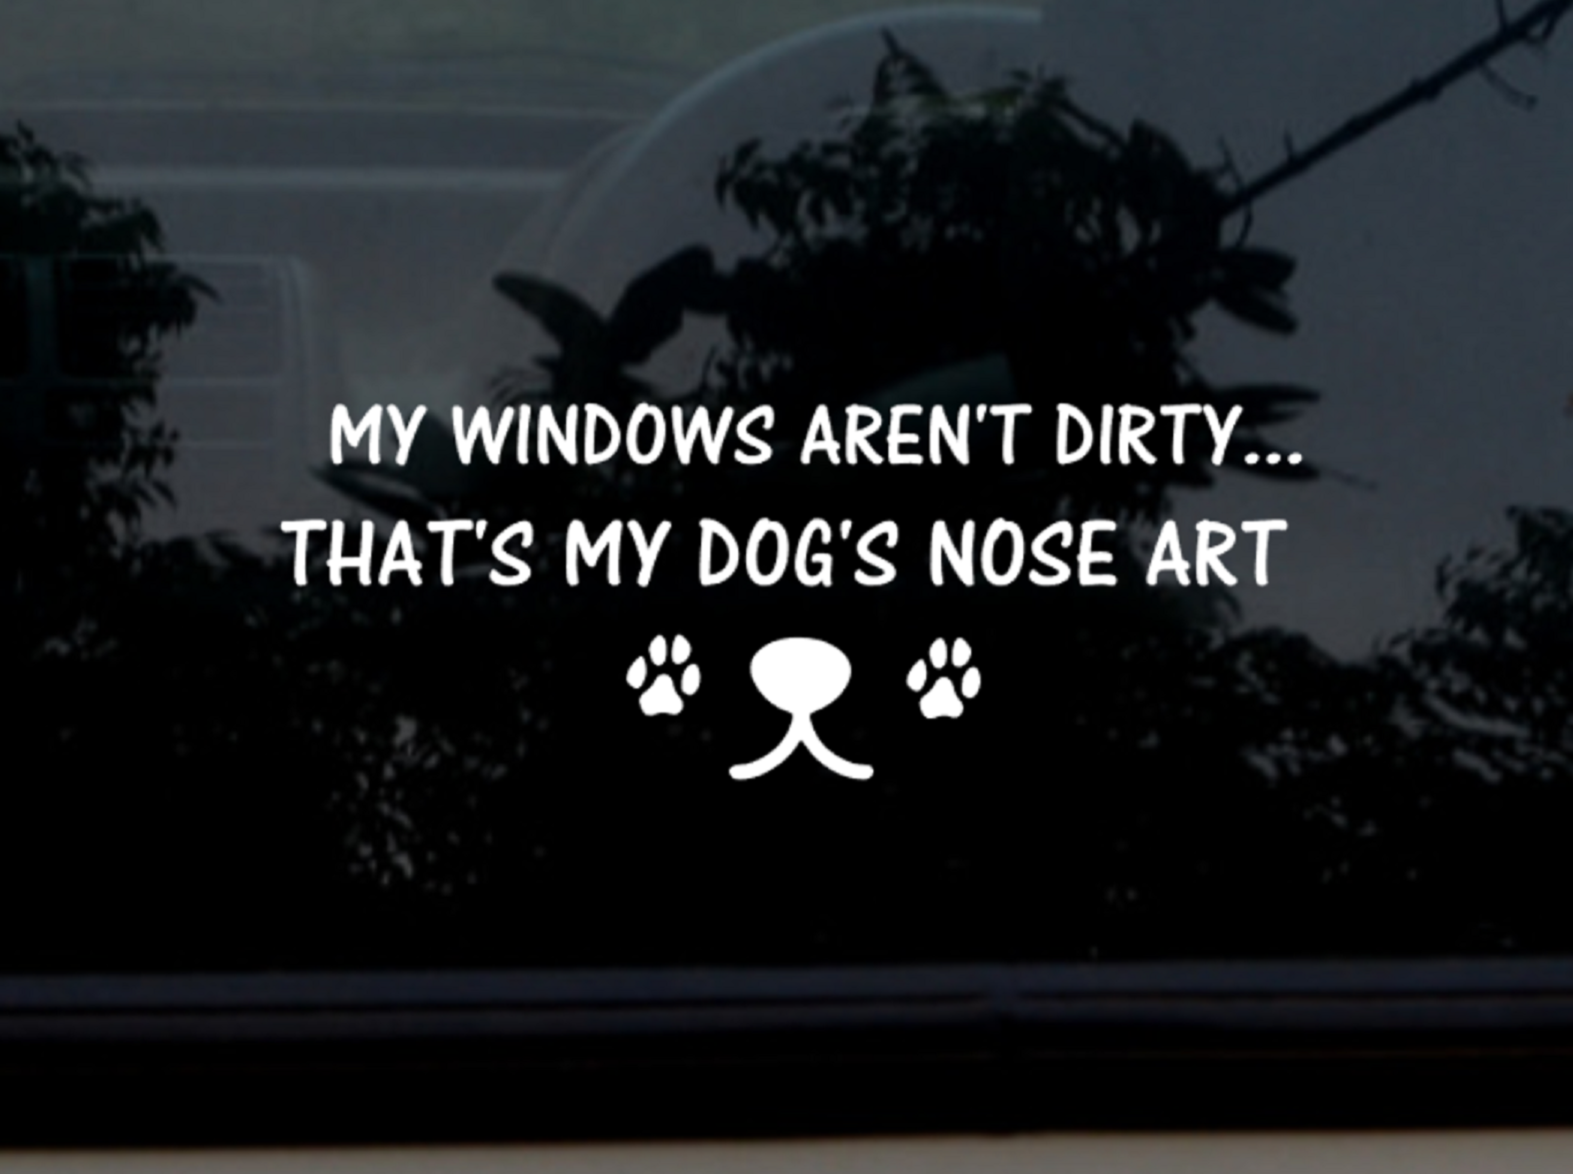 My windows aren't dirty